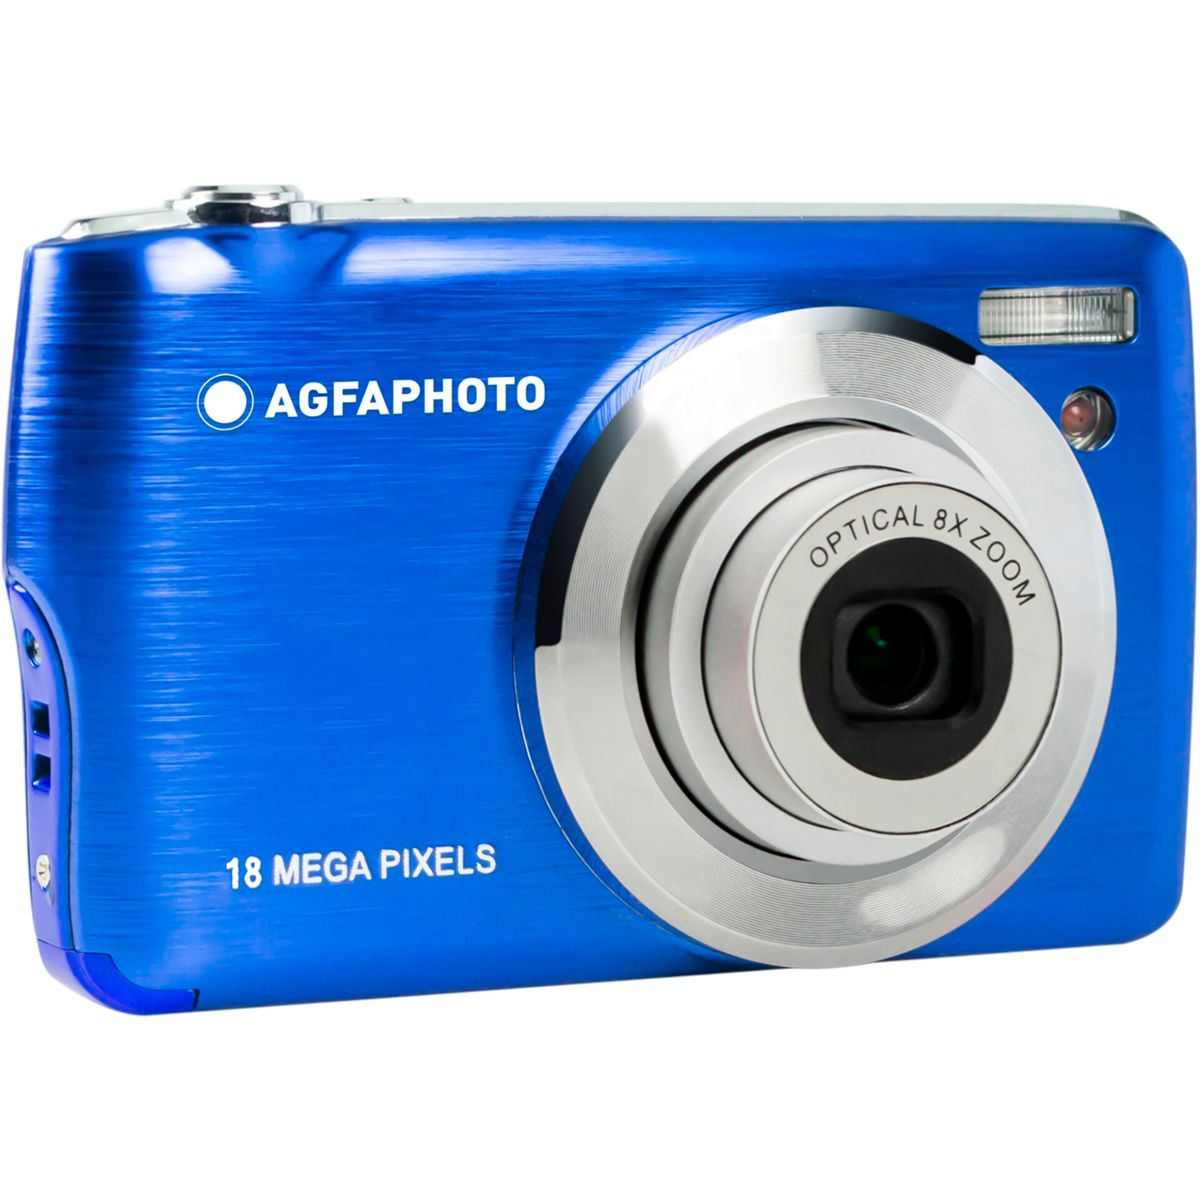 opt. Realishot 8 blau, DC8200 Zoom, TFT- Digitalkamera LCD x mit AGFAPHOTO blau LCD-Backlight